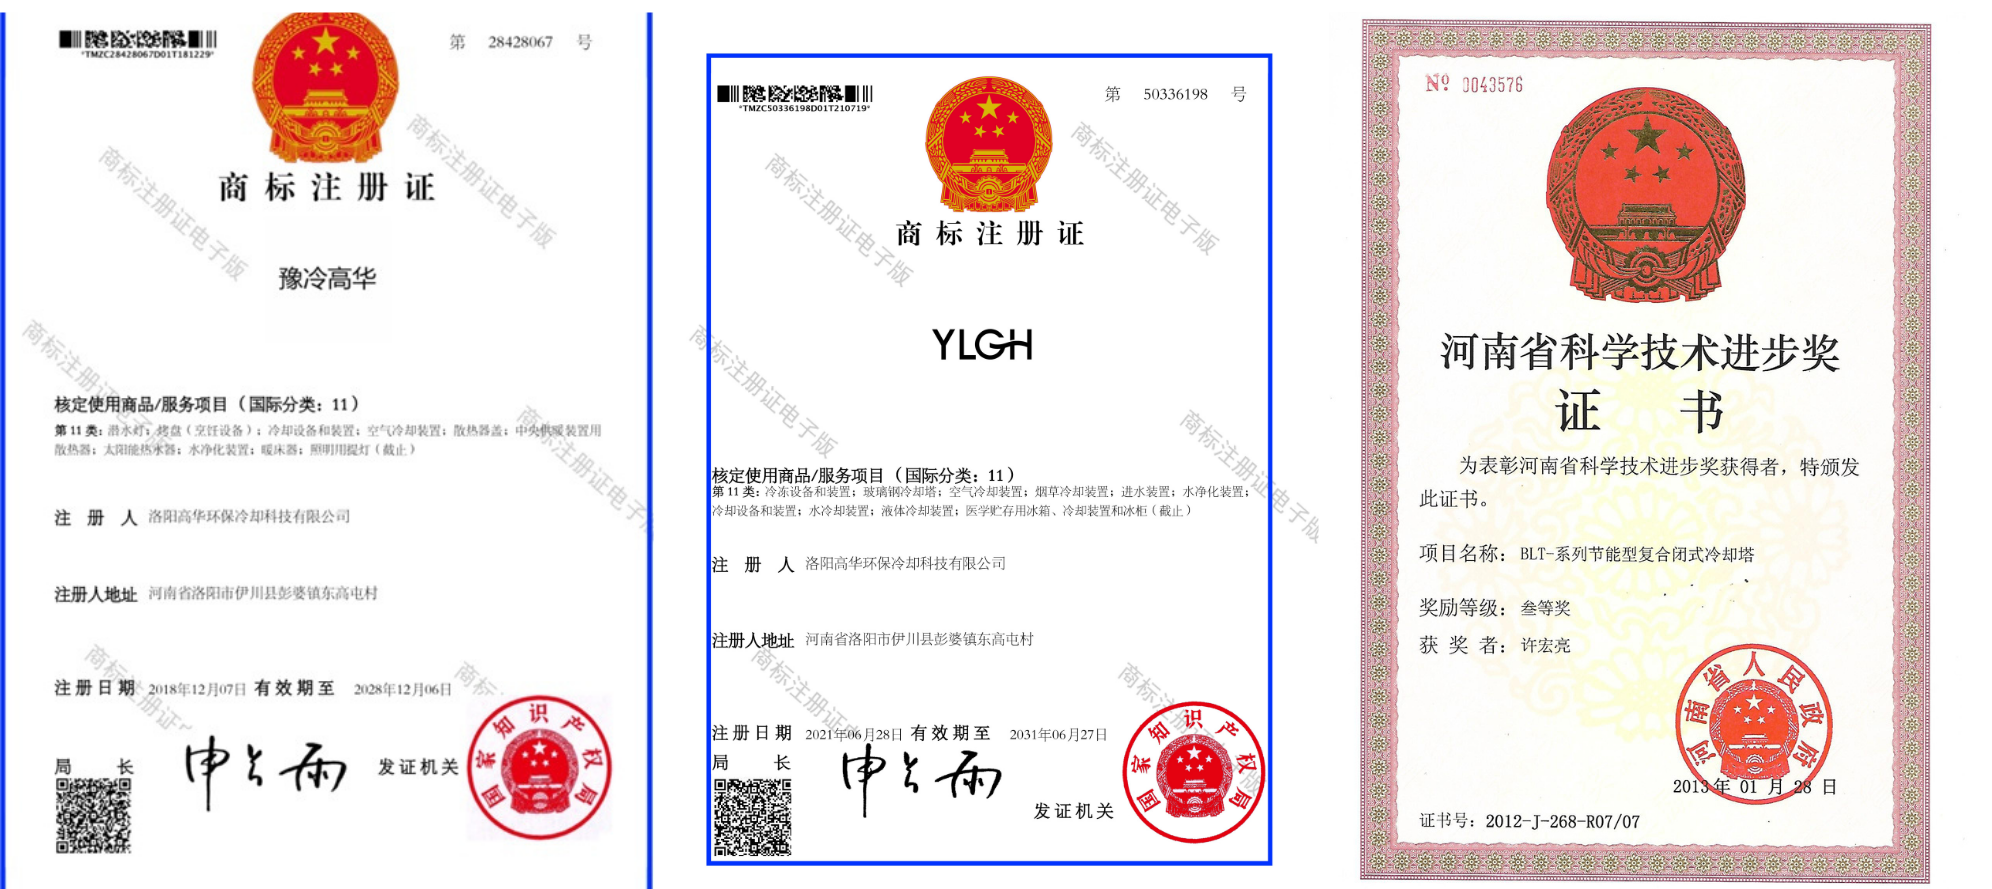 Trademark certification of Gaohua